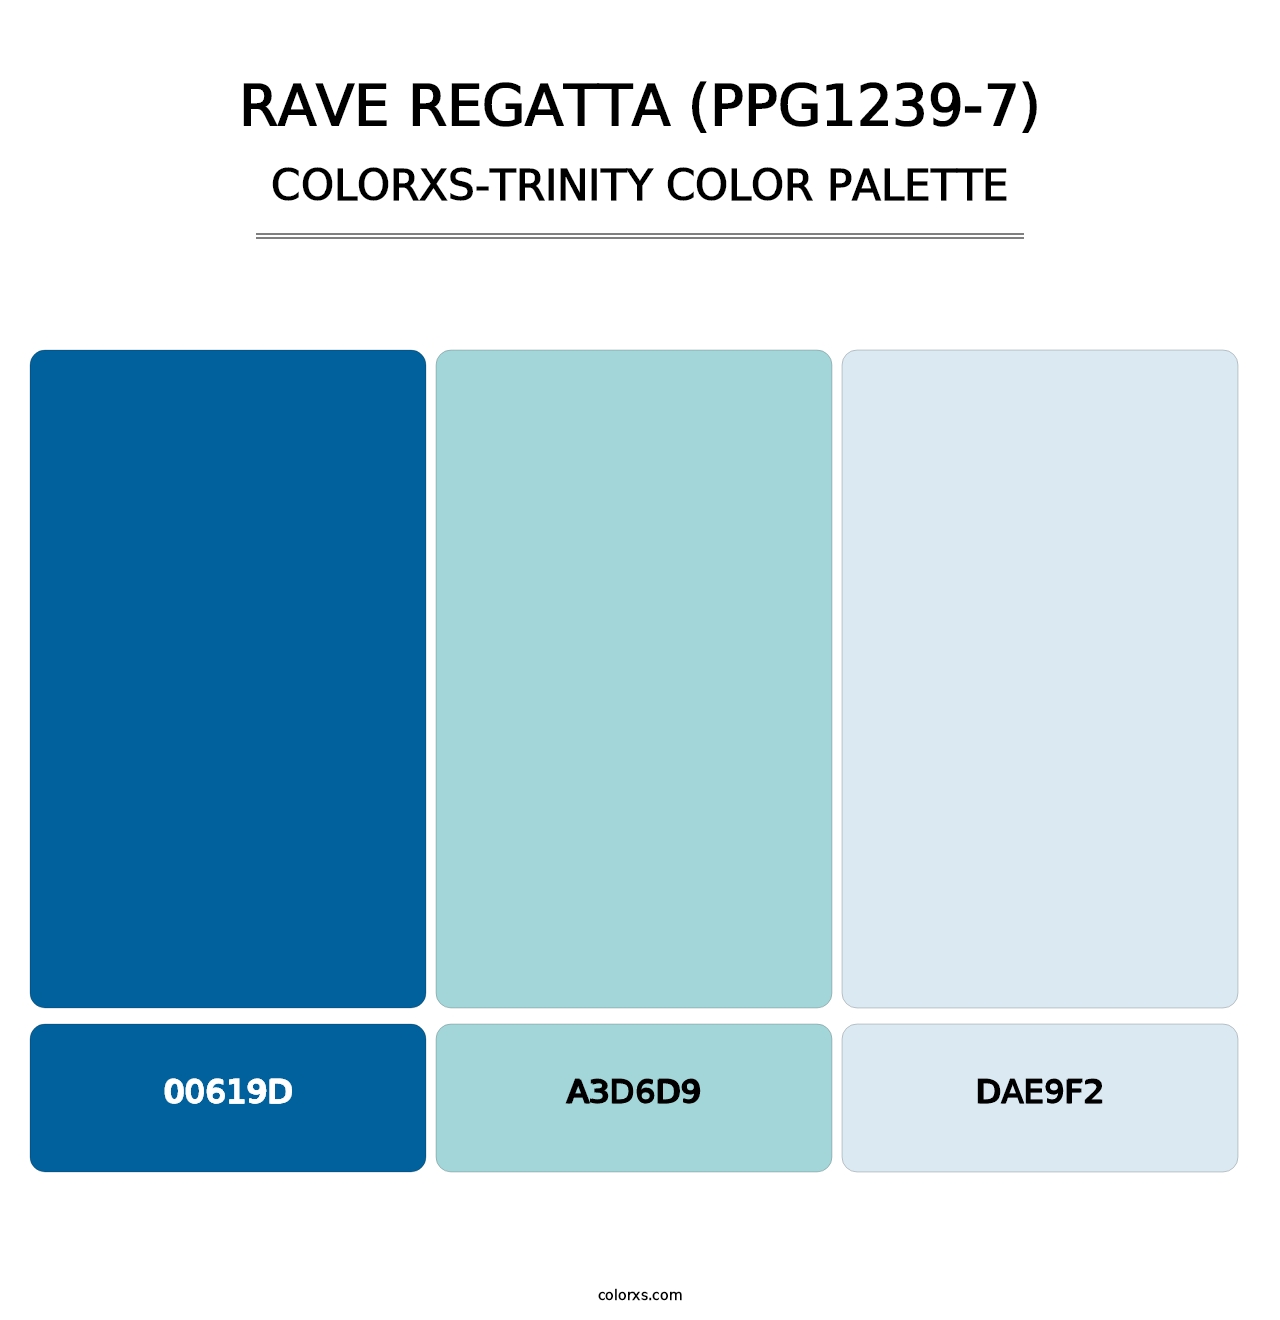 Rave Regatta (PPG1239-7) - Colorxs Trinity Palette